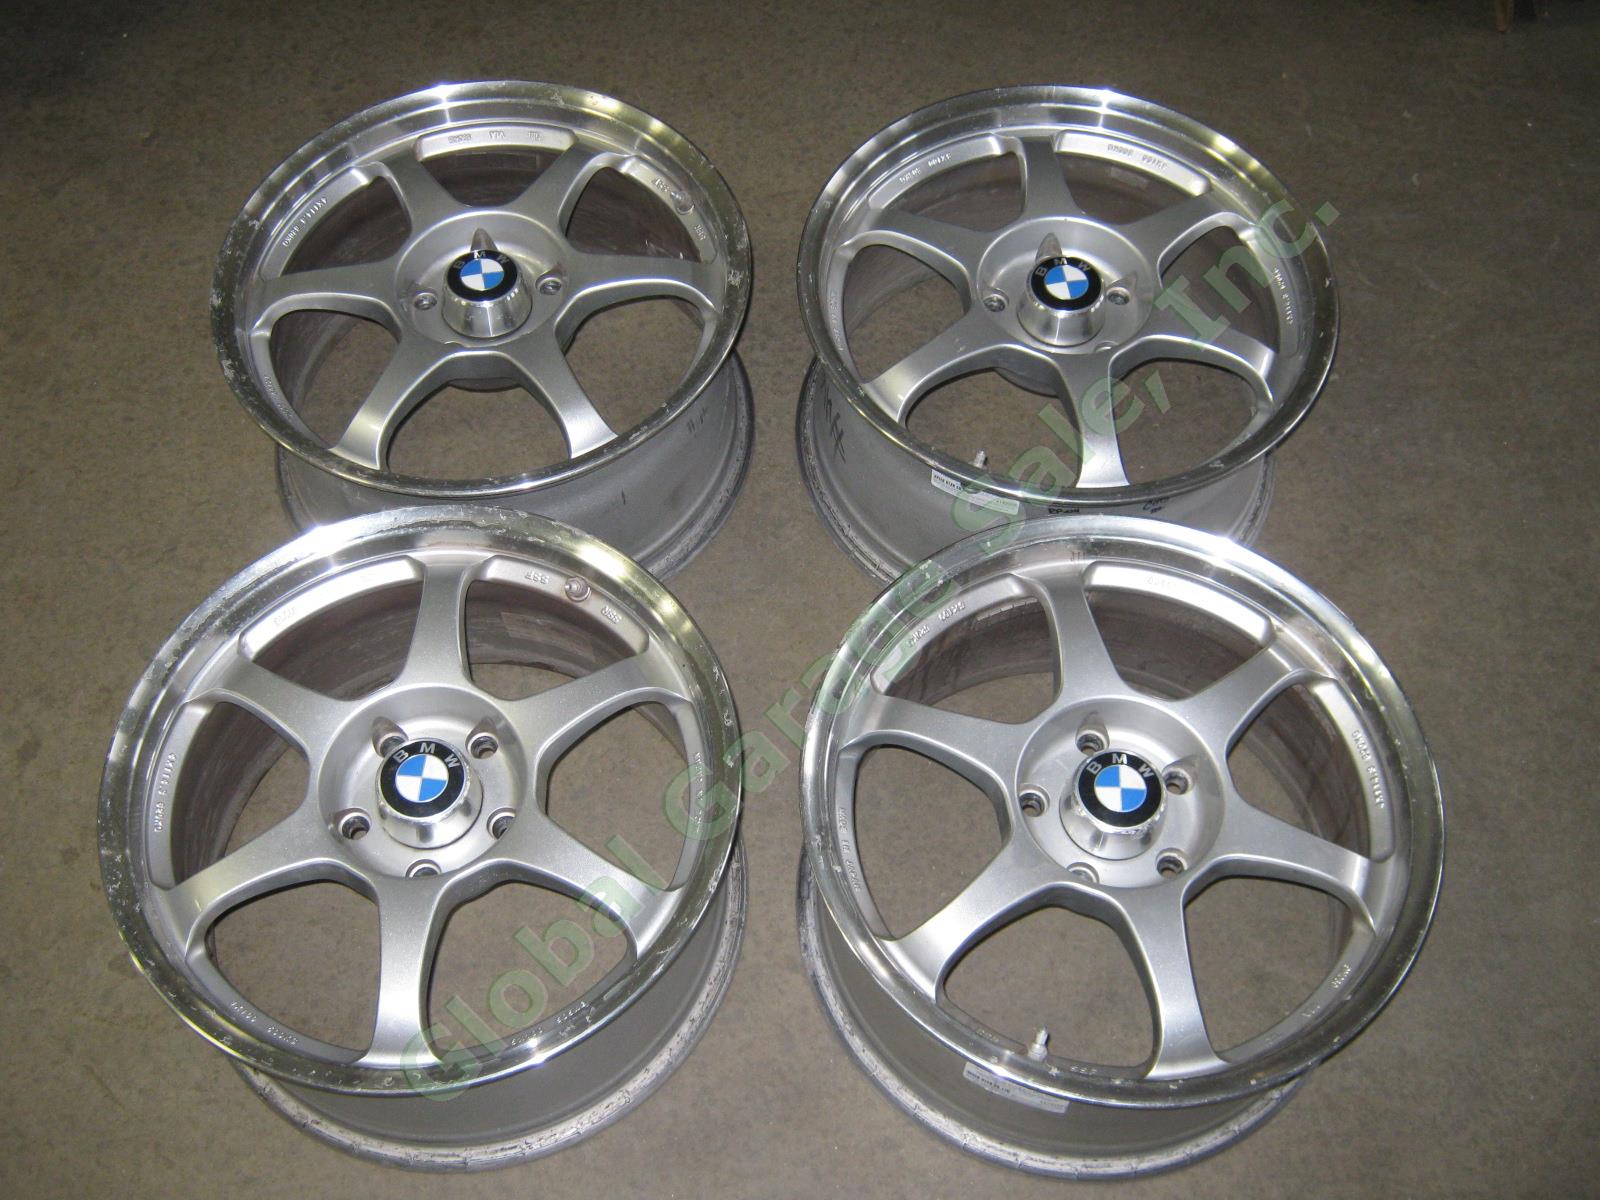 4 Speed Star BMW M3 SSR Type C 17x8.5 5x100 Aluminum Alloy Wheels Rims Set Lot